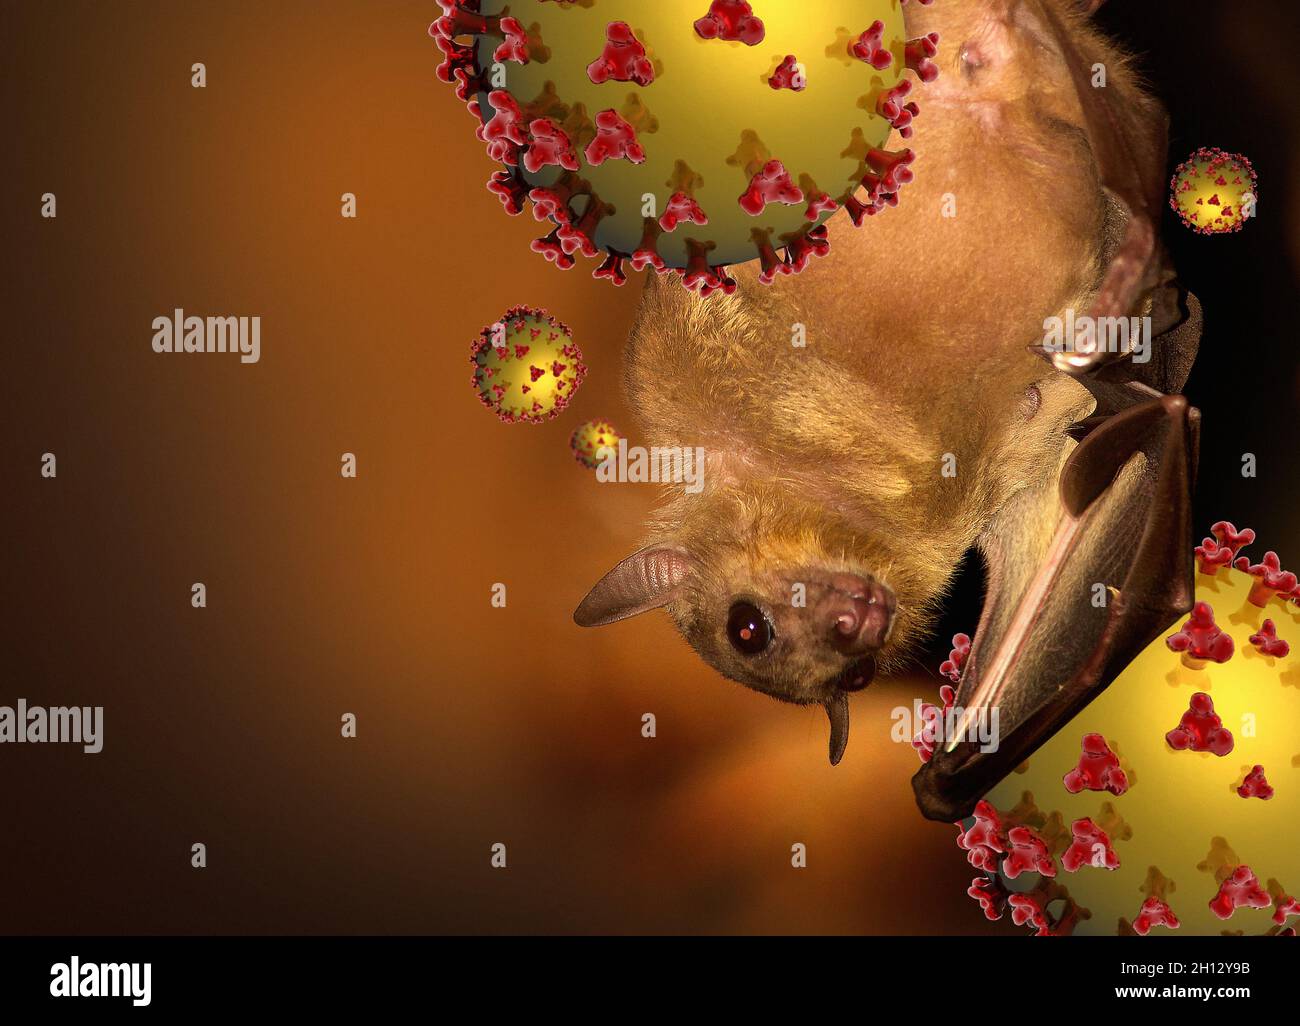 Fruit bat and Nipah virus particles, illustration Stock Photo